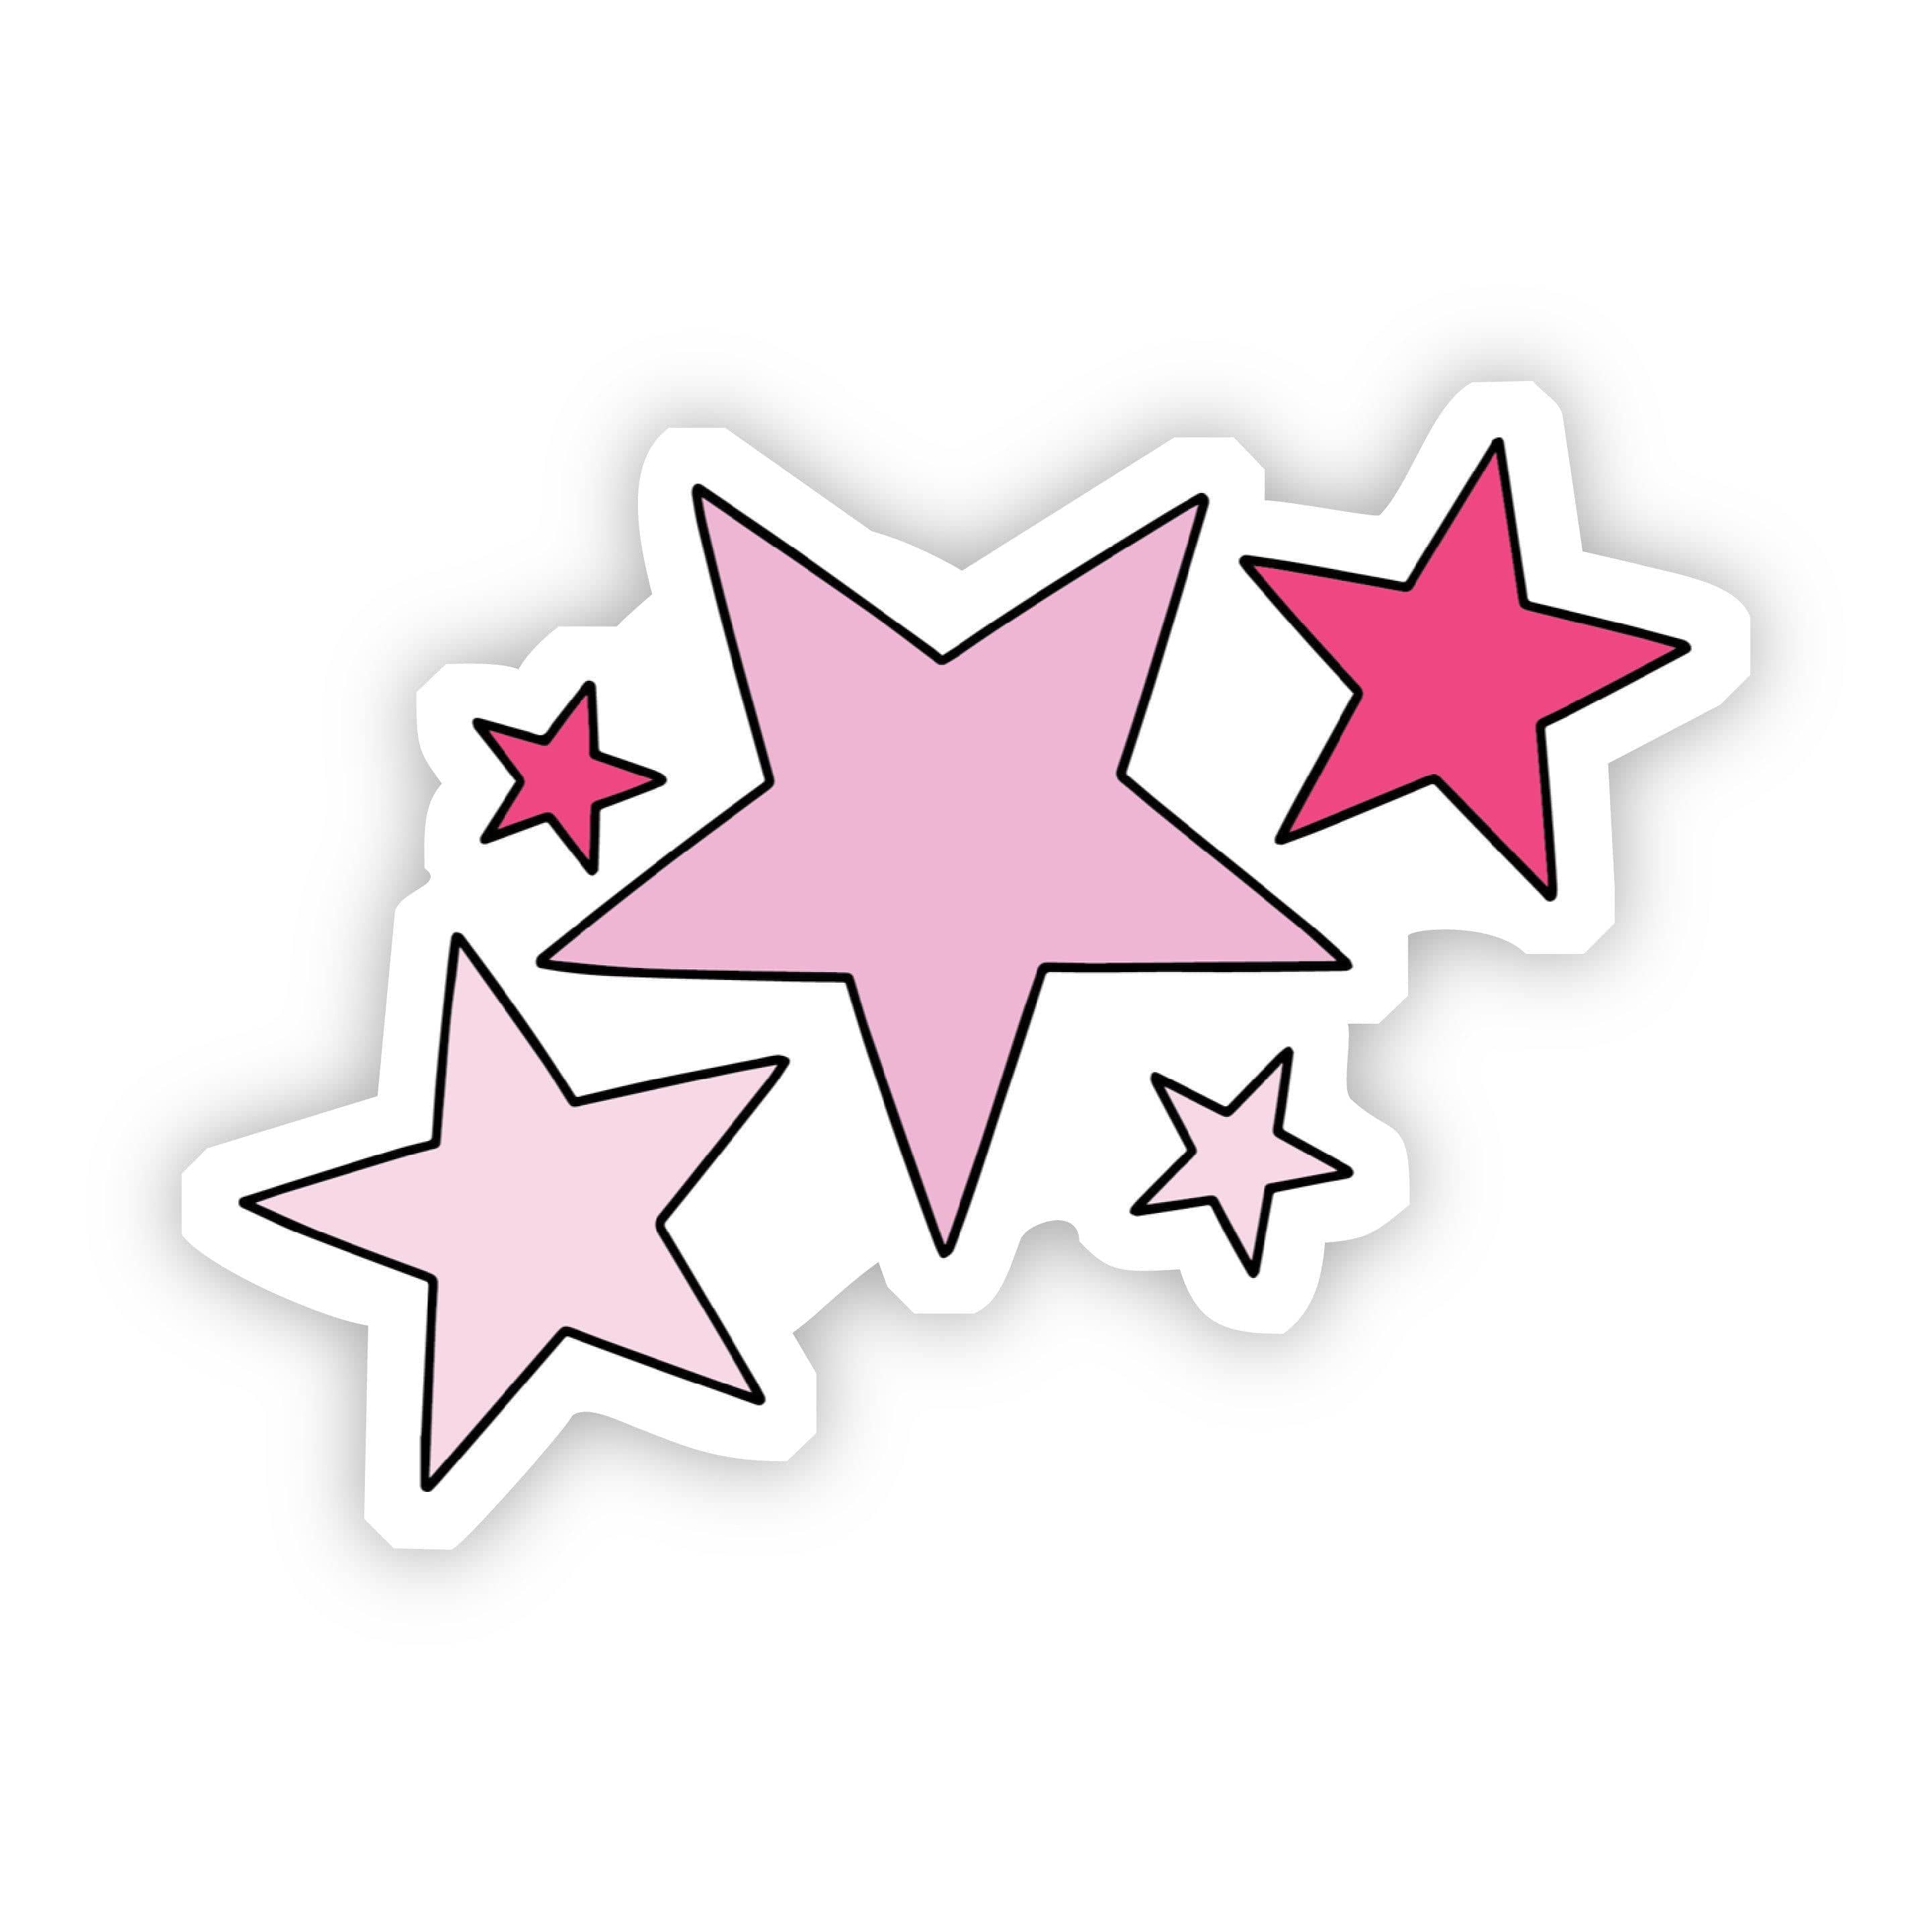 Star Stickers 